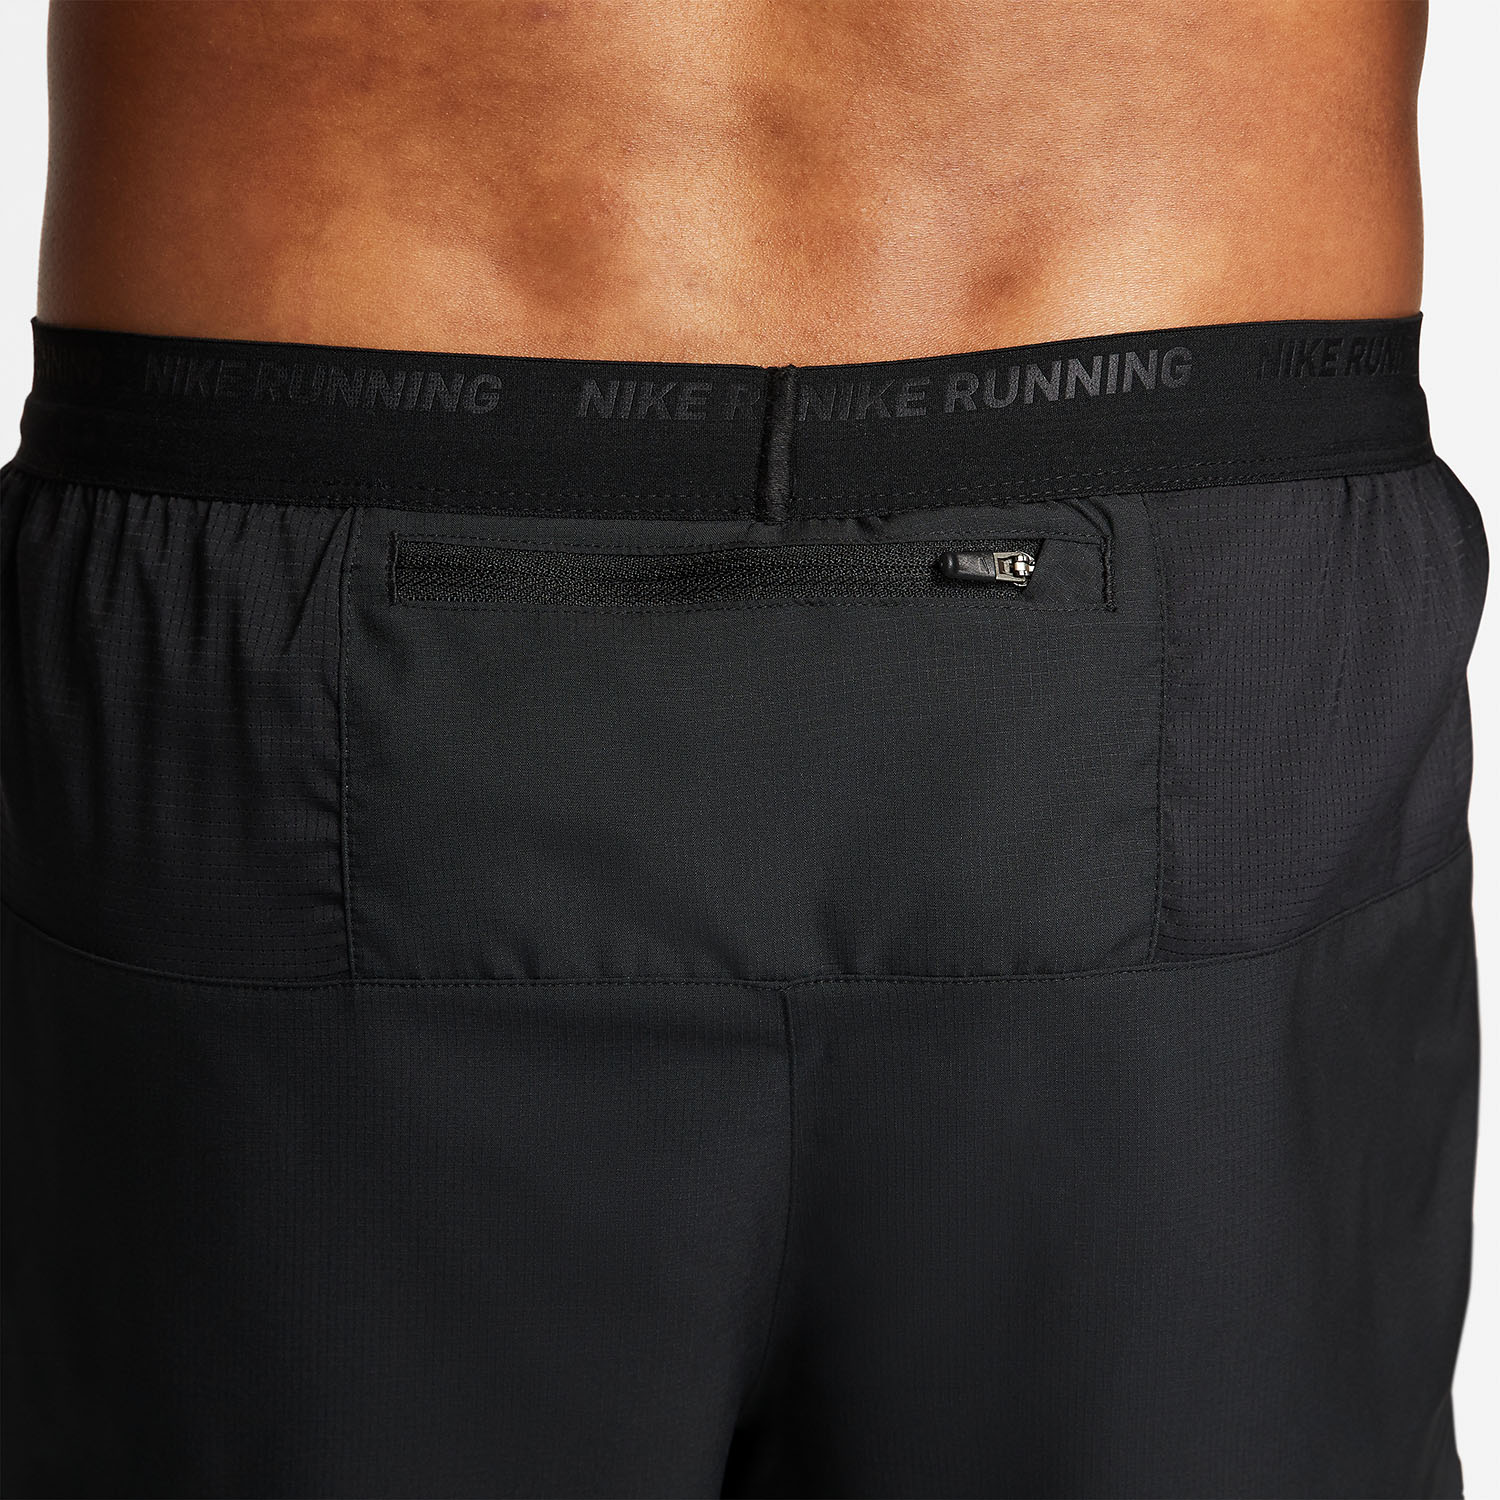 Nike Dri-FIT Stride 2 in 1 7in Shorts - Black/Reflective Silver